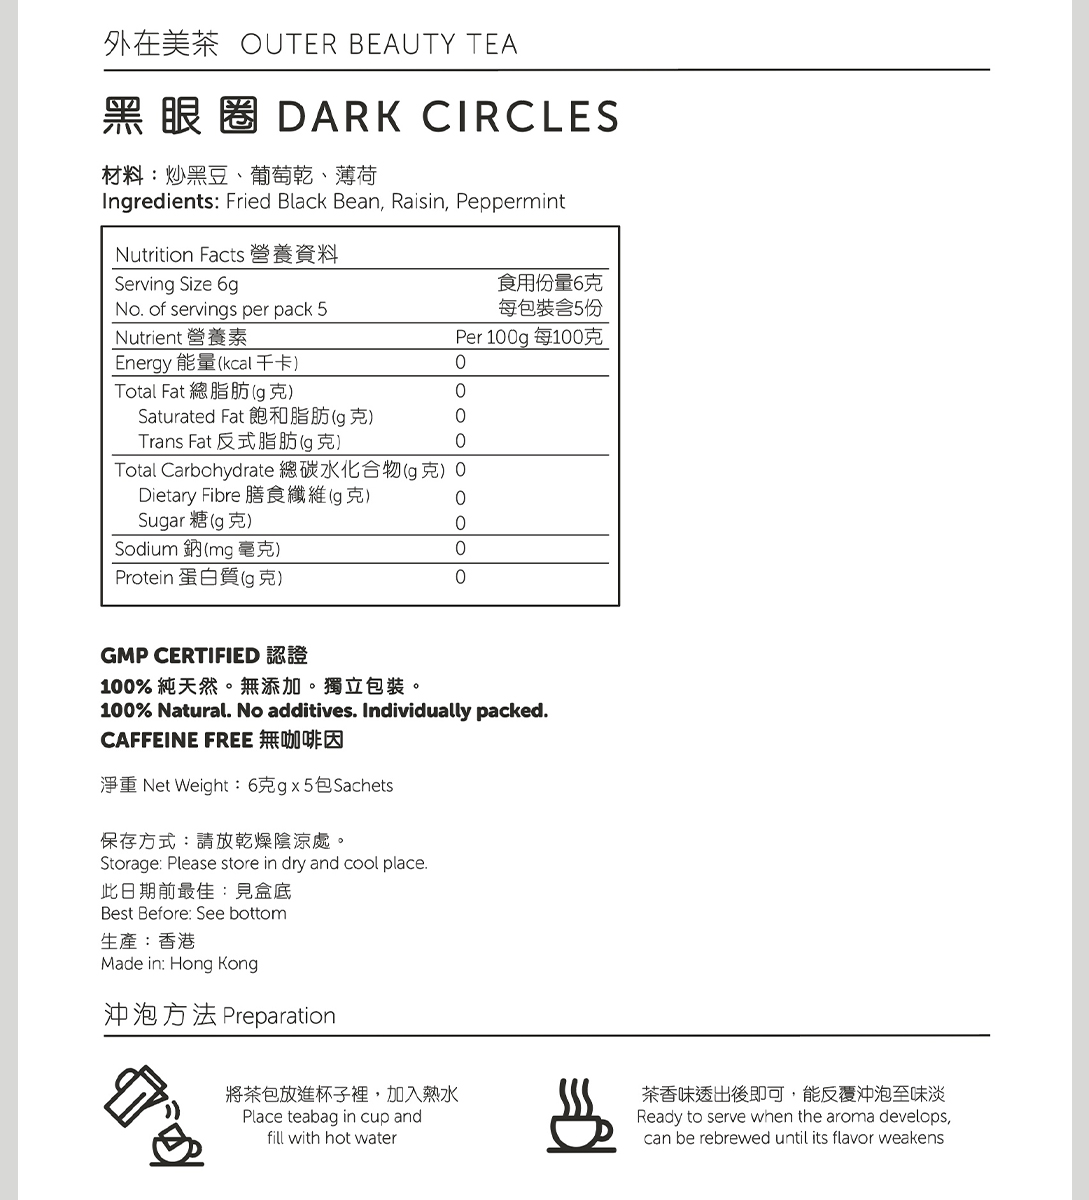 Dark Circles